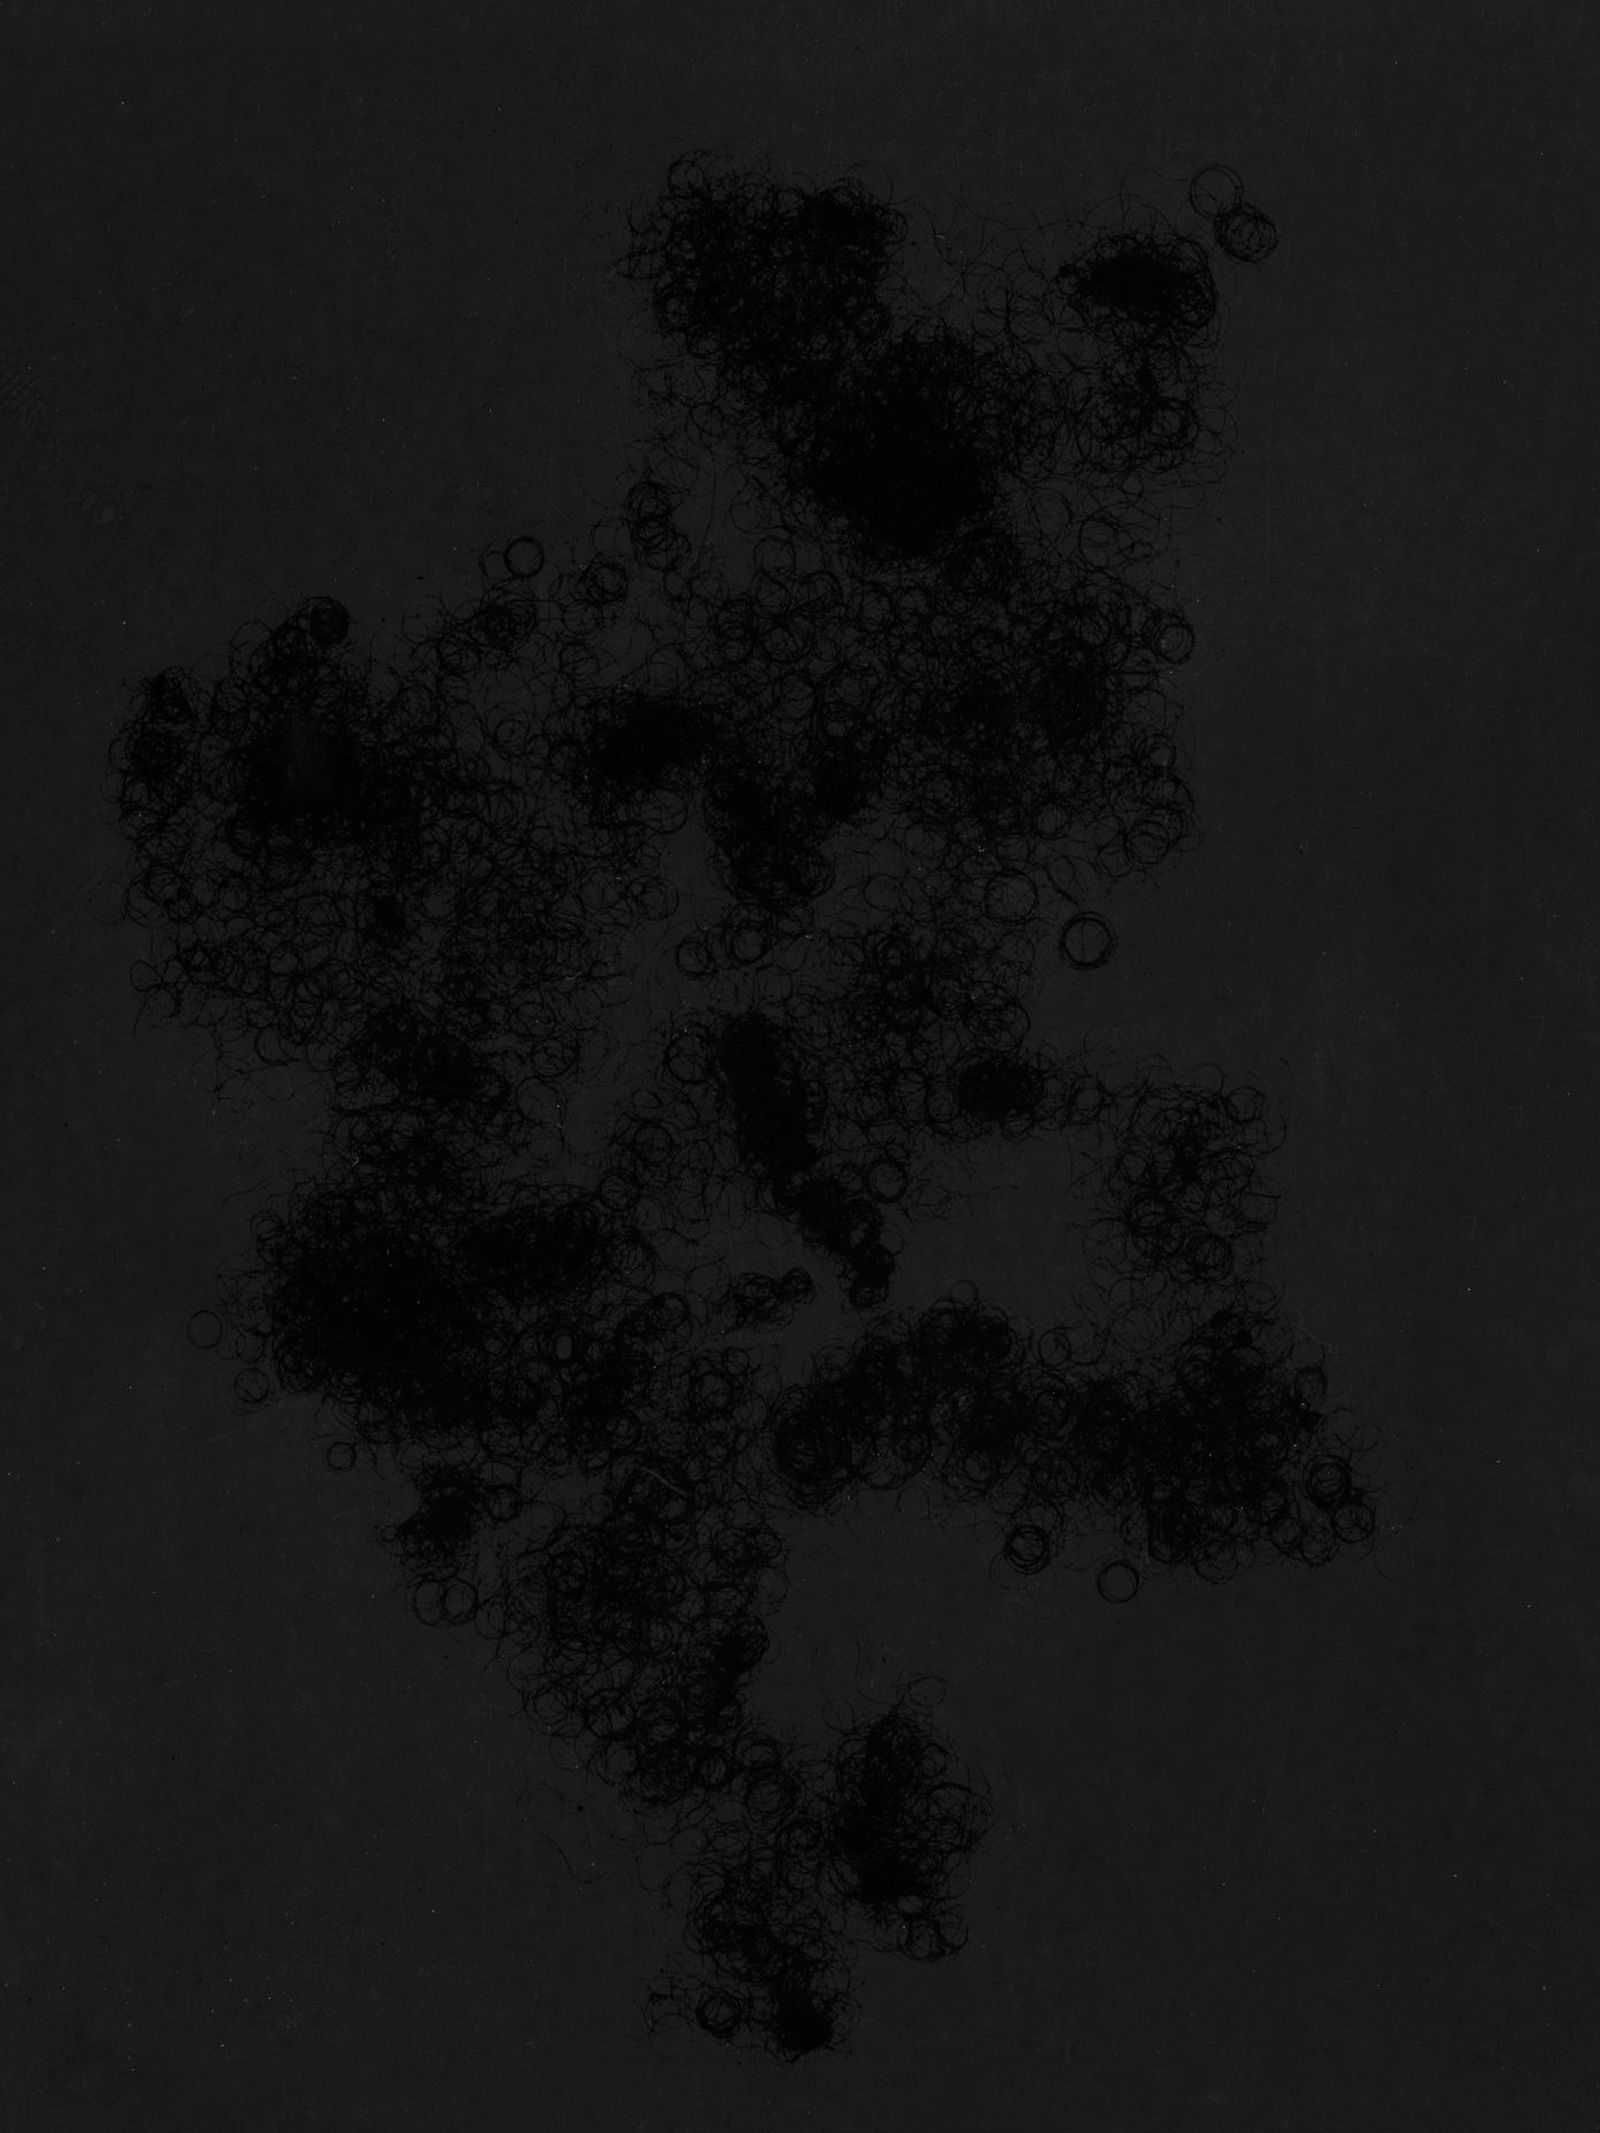 © Melanie Issaka - Dark & Lovely: Black on Black Photogram, Silver Gelatin print, 20x25cm, 2021